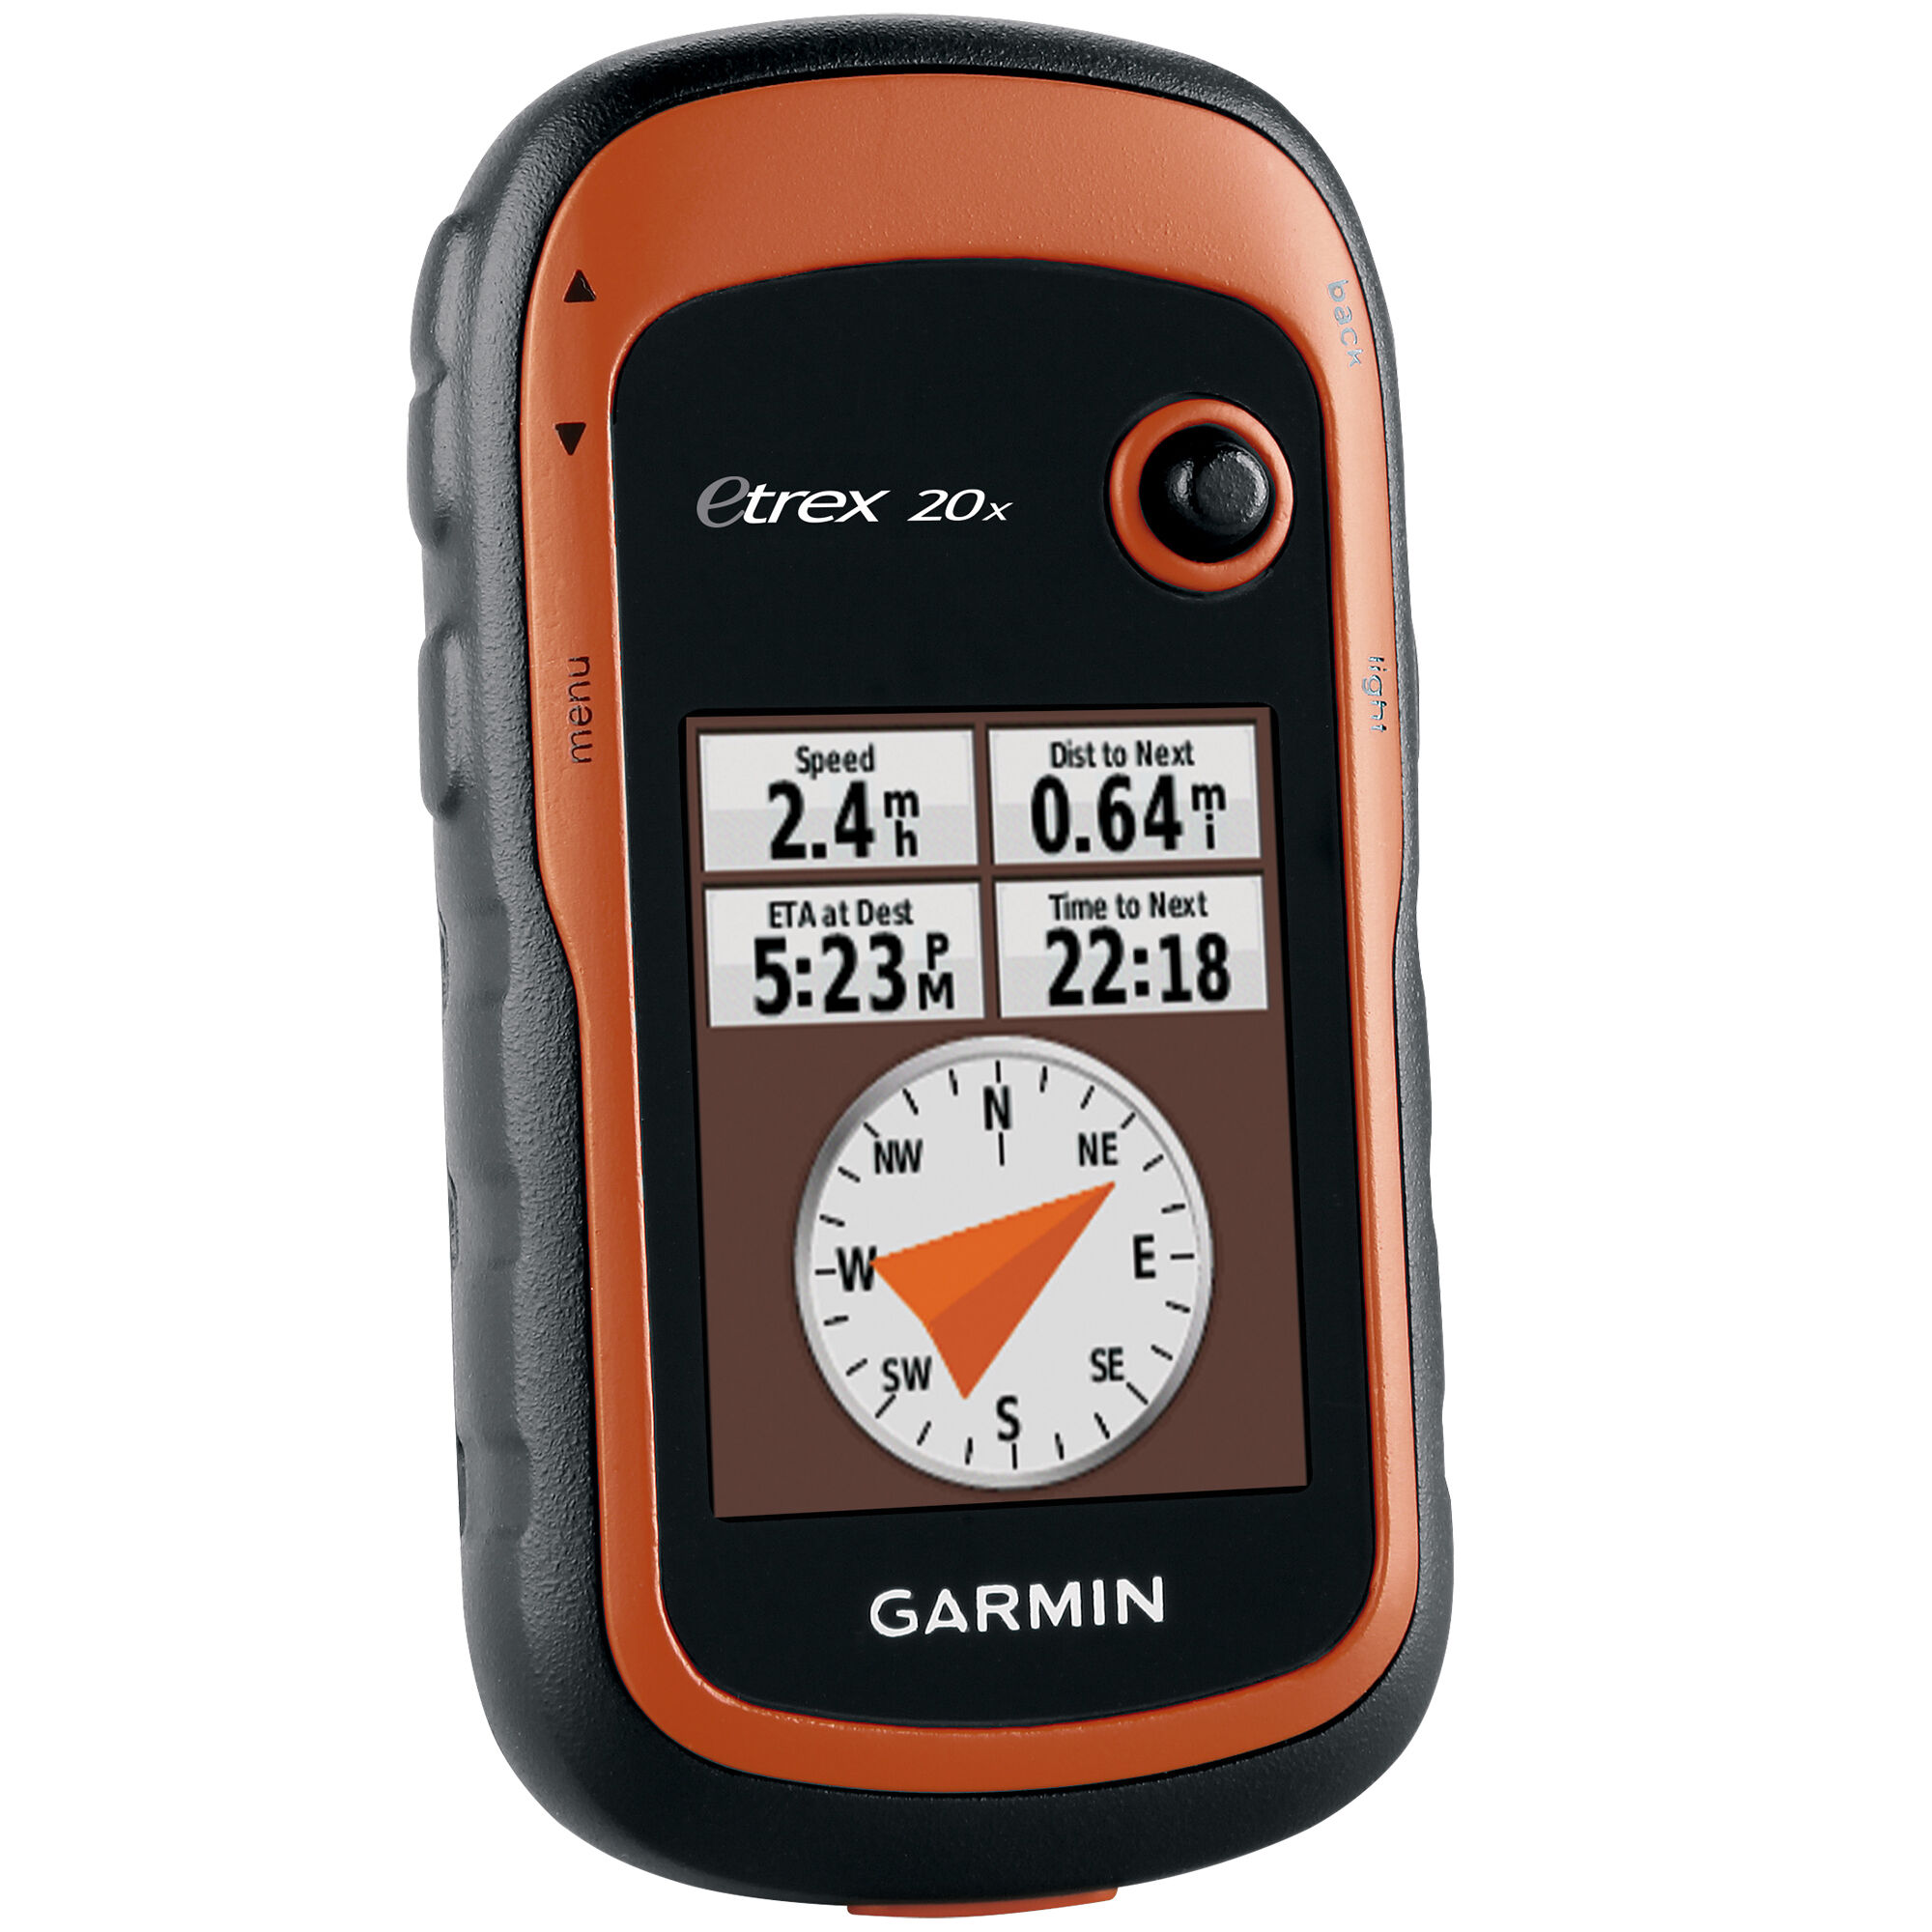 Garmin eTrex 20x Handheld GPS | Overton's